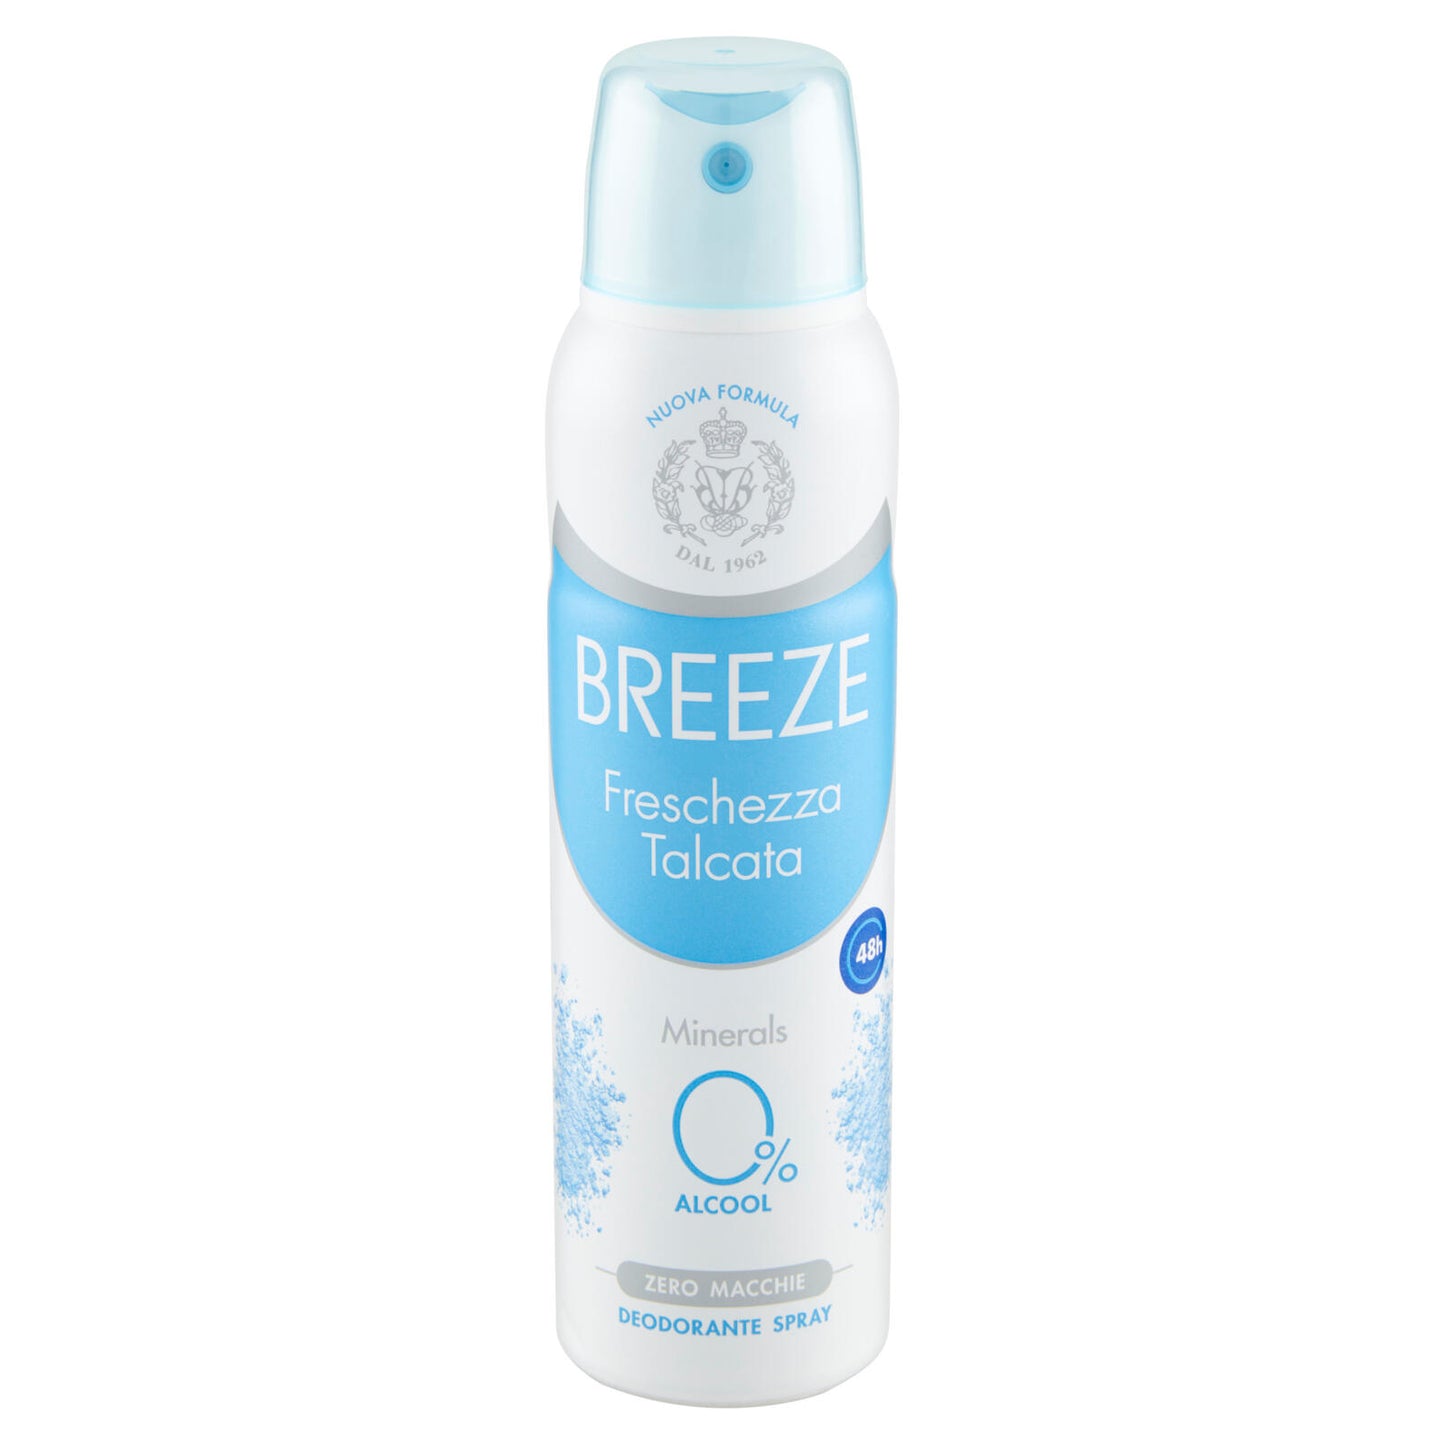 Breeze Freschezza Talcata Deodorante Spray 150 mL